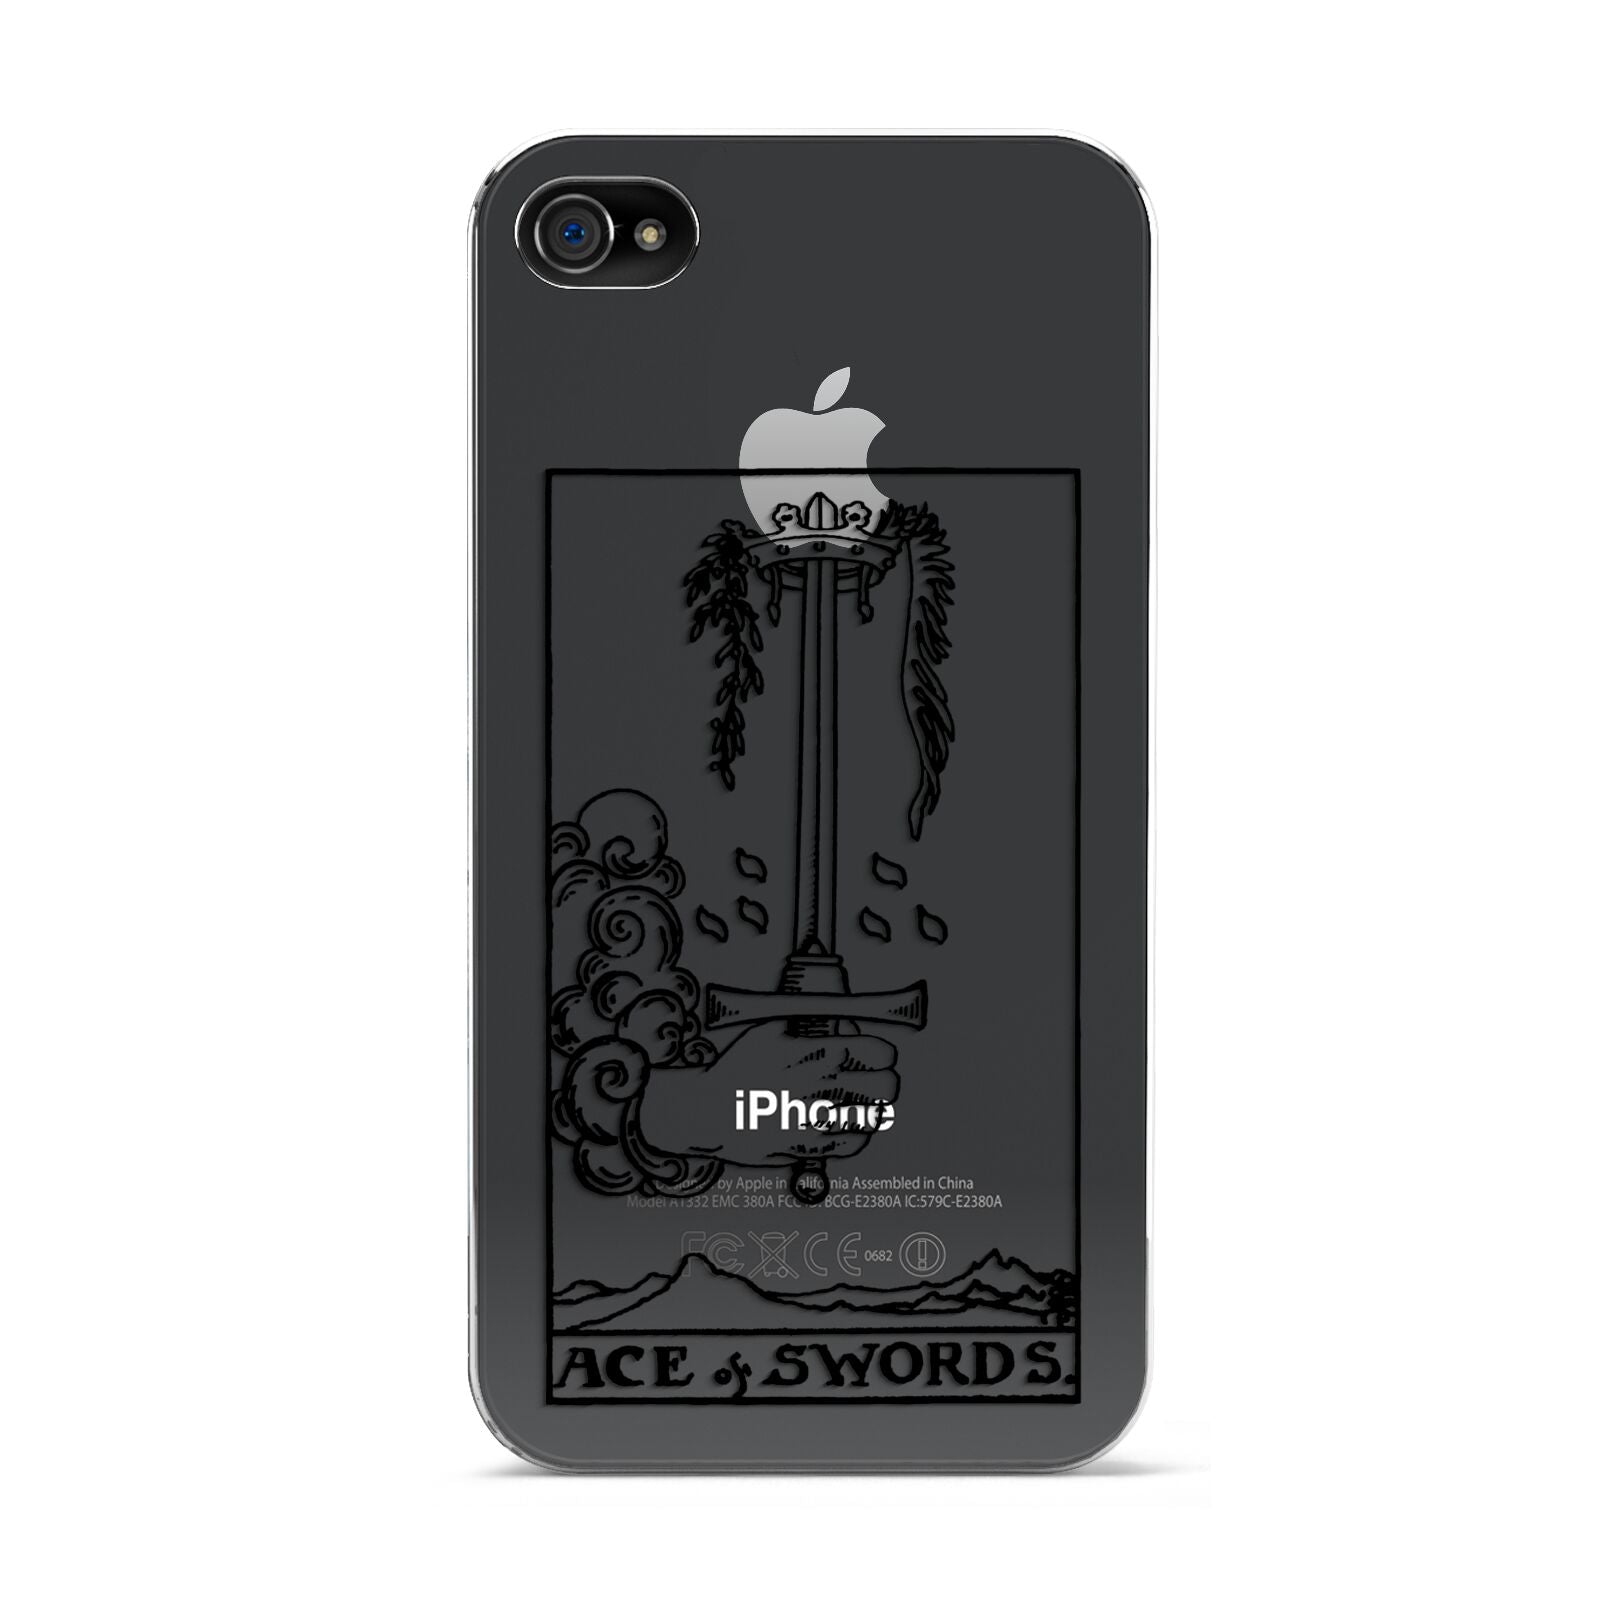 Ace of Swords Monochrome Apple iPhone 4s Case